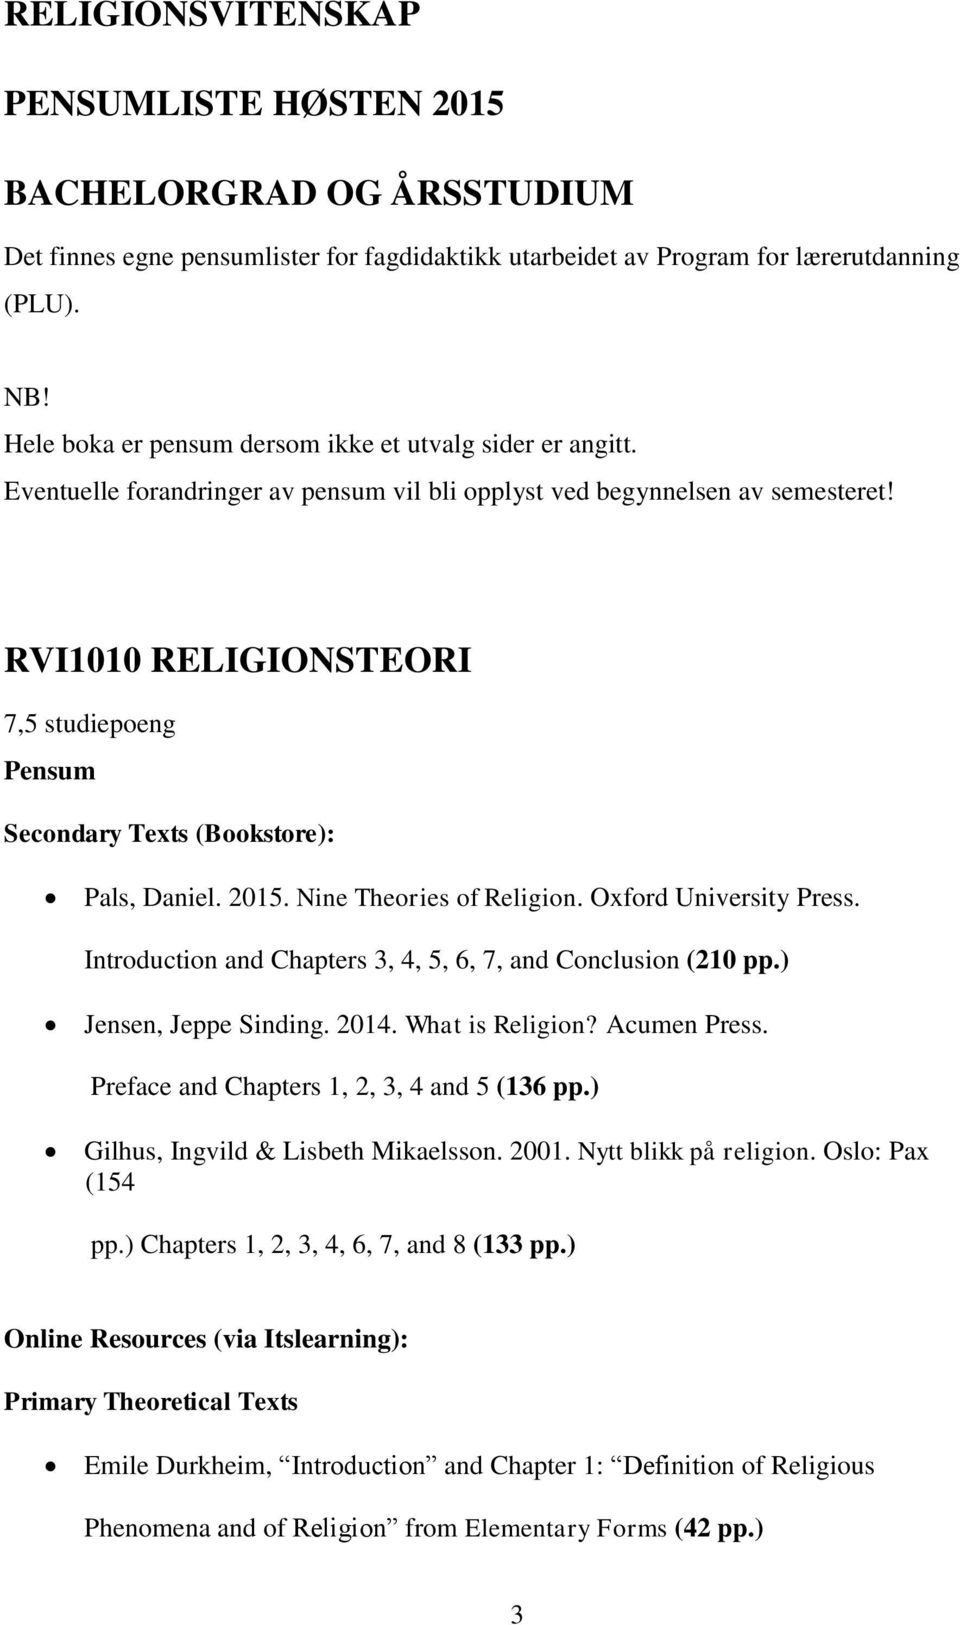 RVI1010 RELIGIONSTEORI 7,5 studiepoeng Pensum Secondary Texts (Bookstore): Pals, Daniel. 2015. Nine Theories of Religion. Oxford University Press.